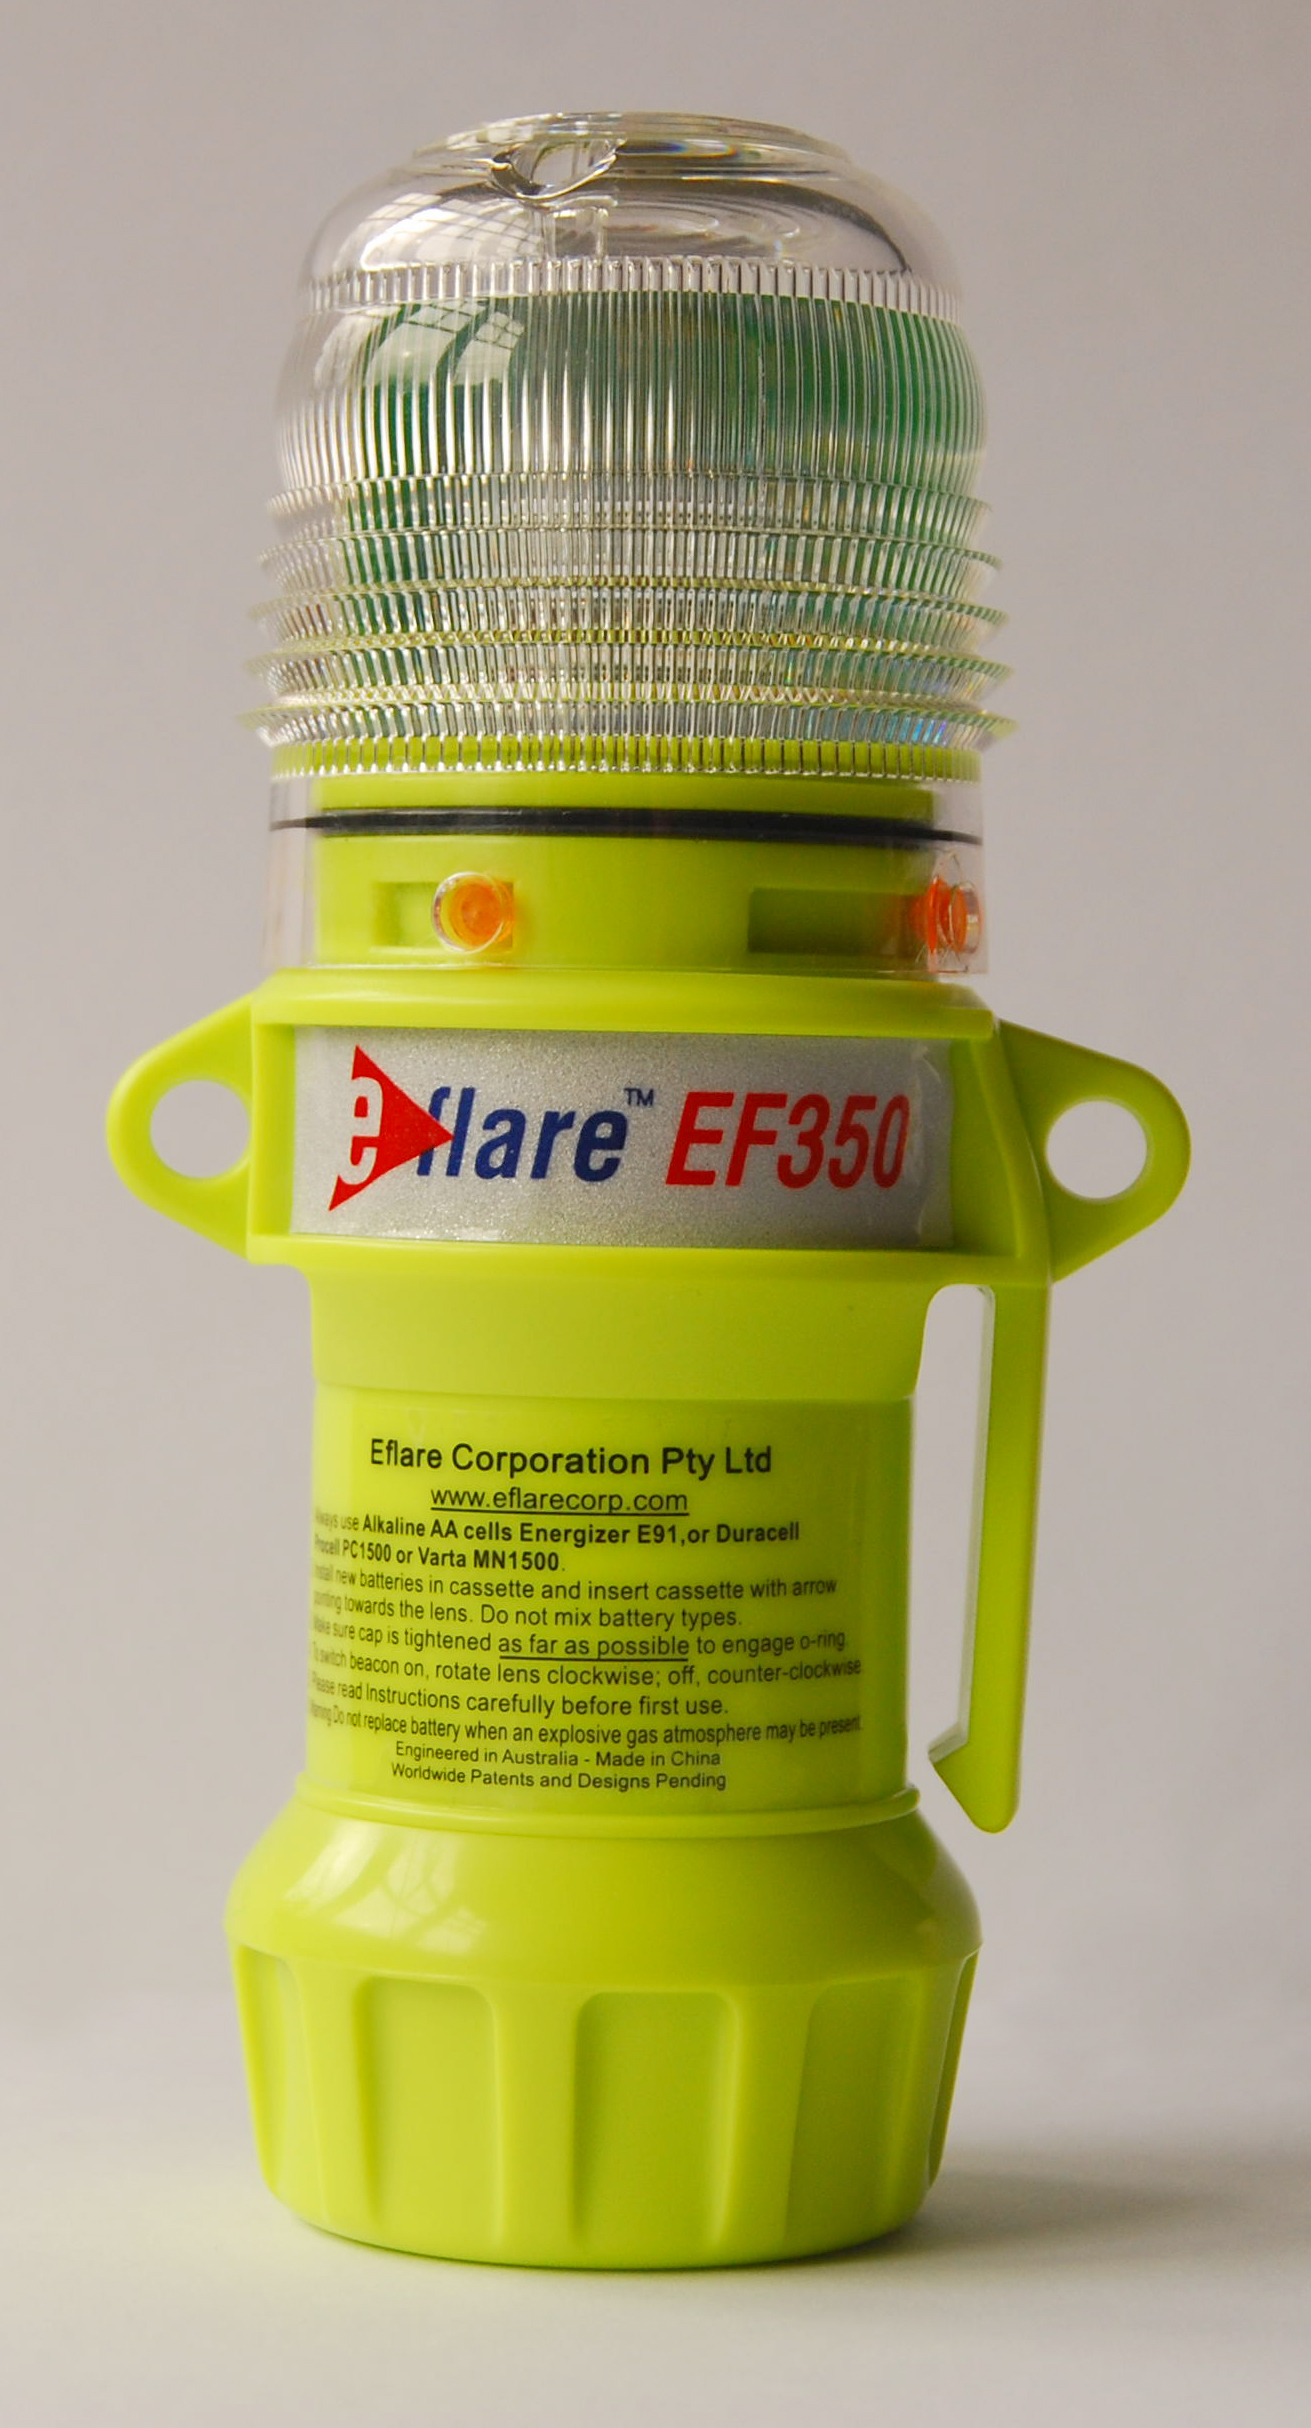 Eflare HZ510 E-Flare Clignotant Ambre Sécurité & Emergency Warning Beacon 